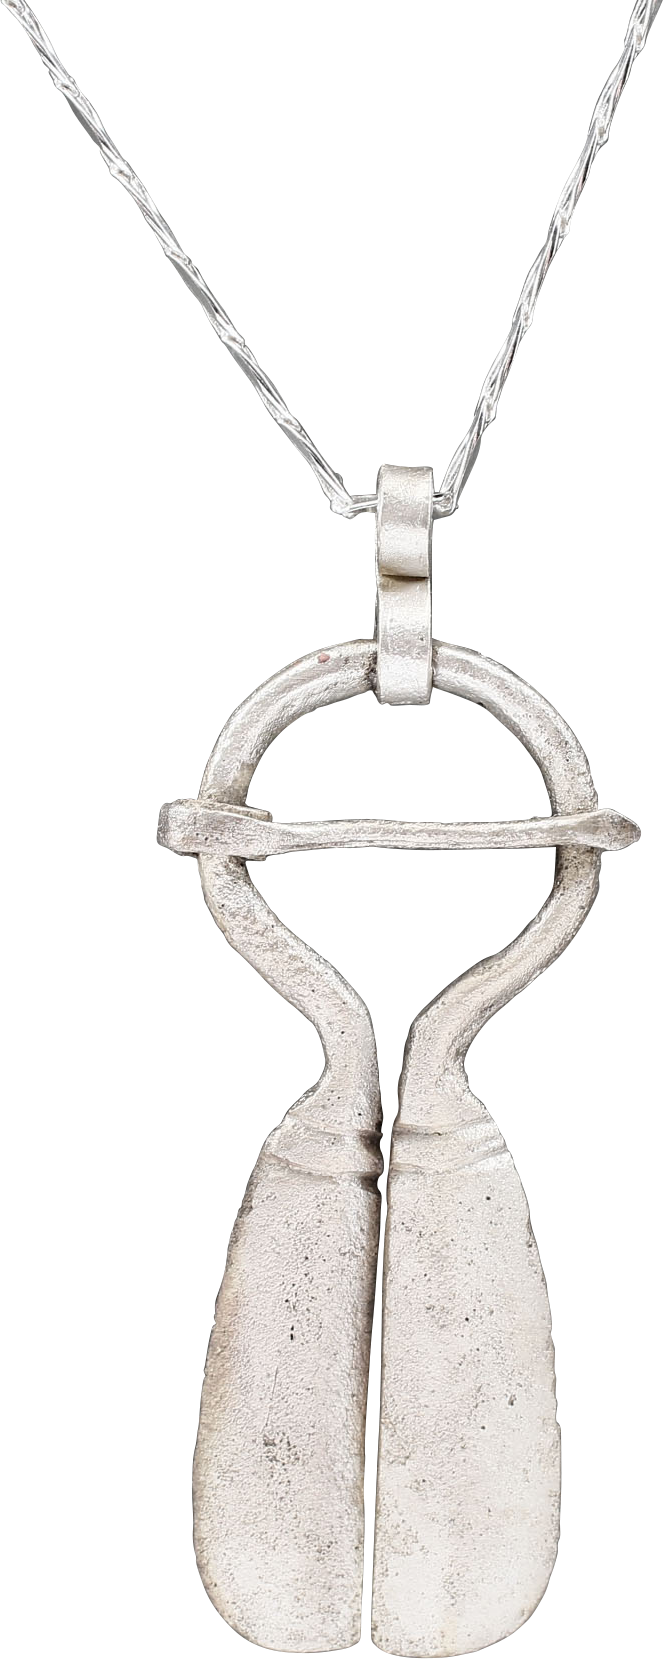  - Fine Viking Protective Brooch, C.950-1050 AD